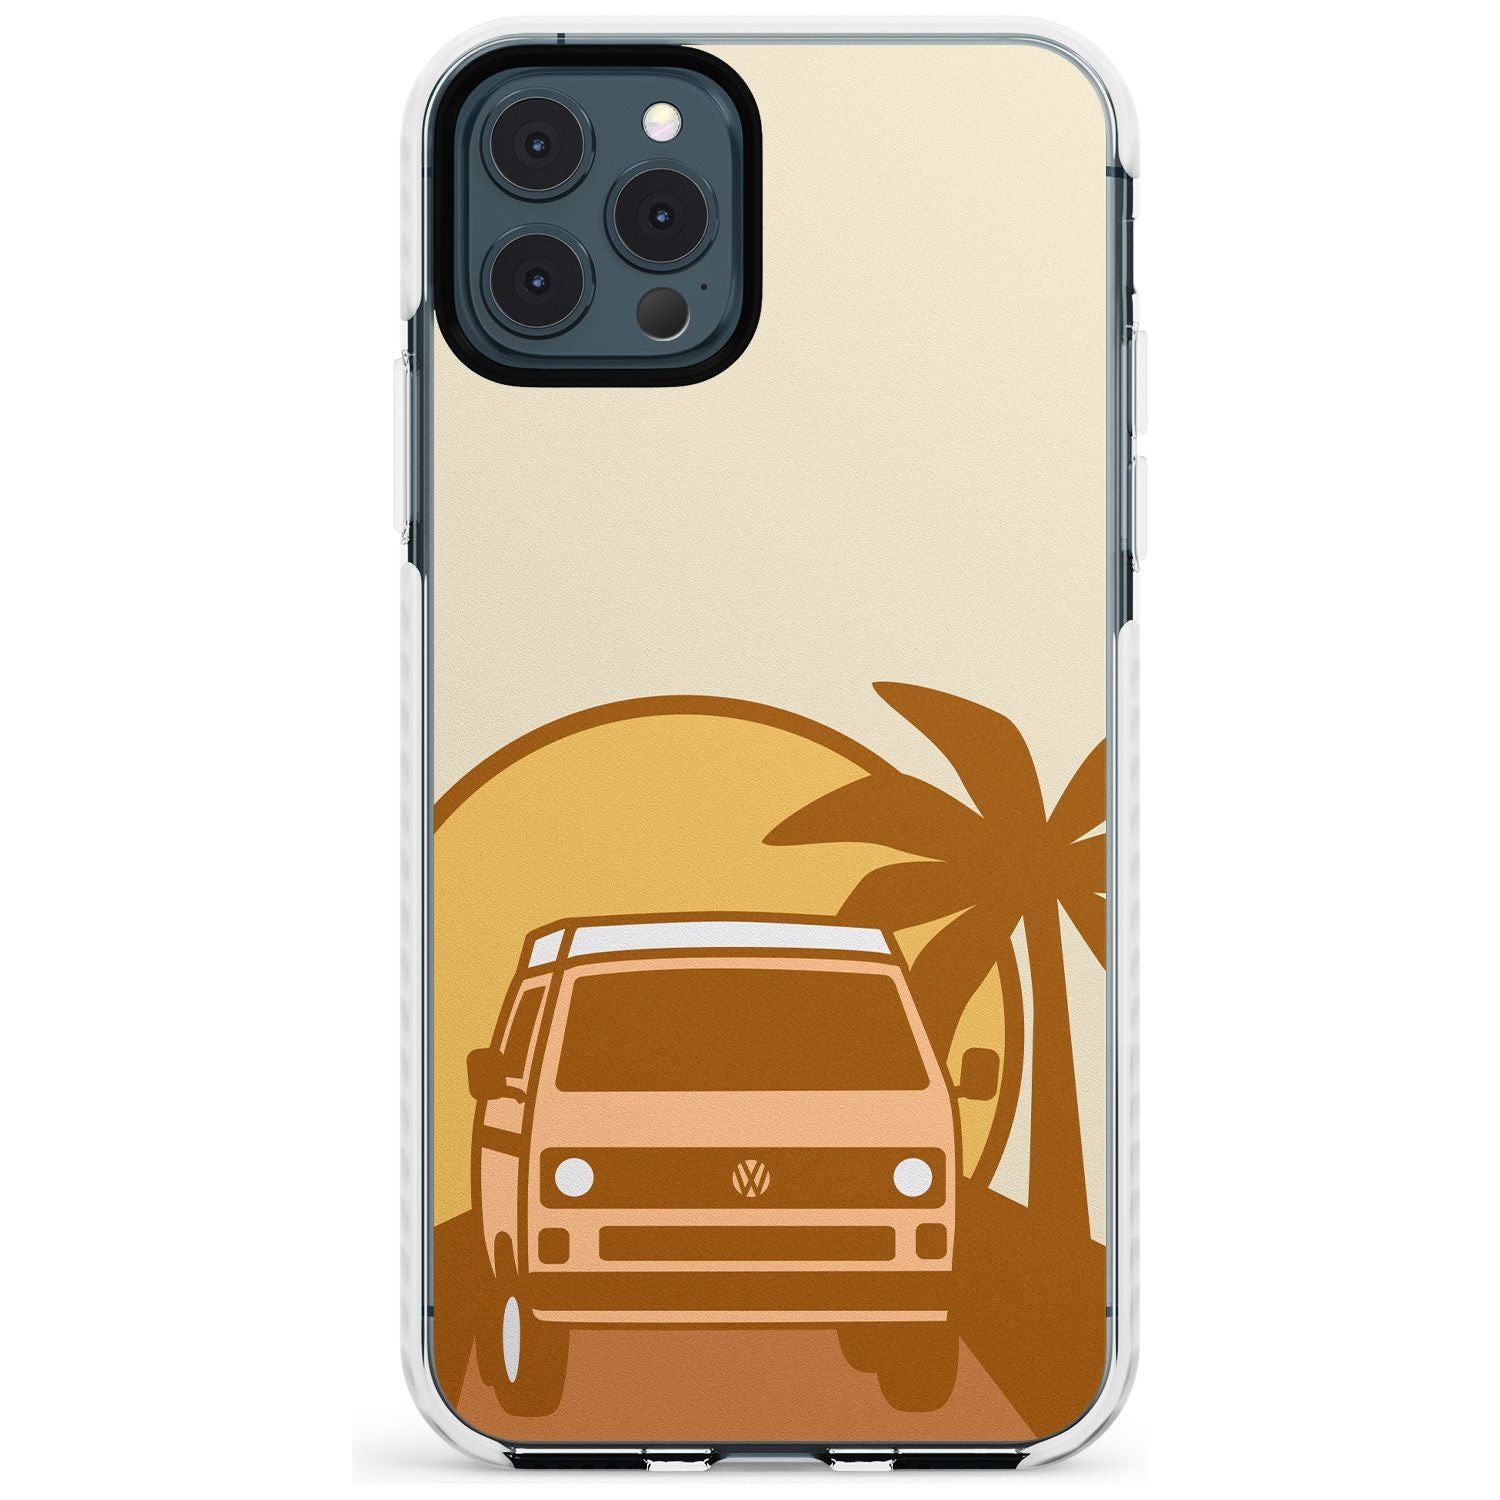 Camp Cruise Slim TPU Phone Case for iPhone 11 Pro Max